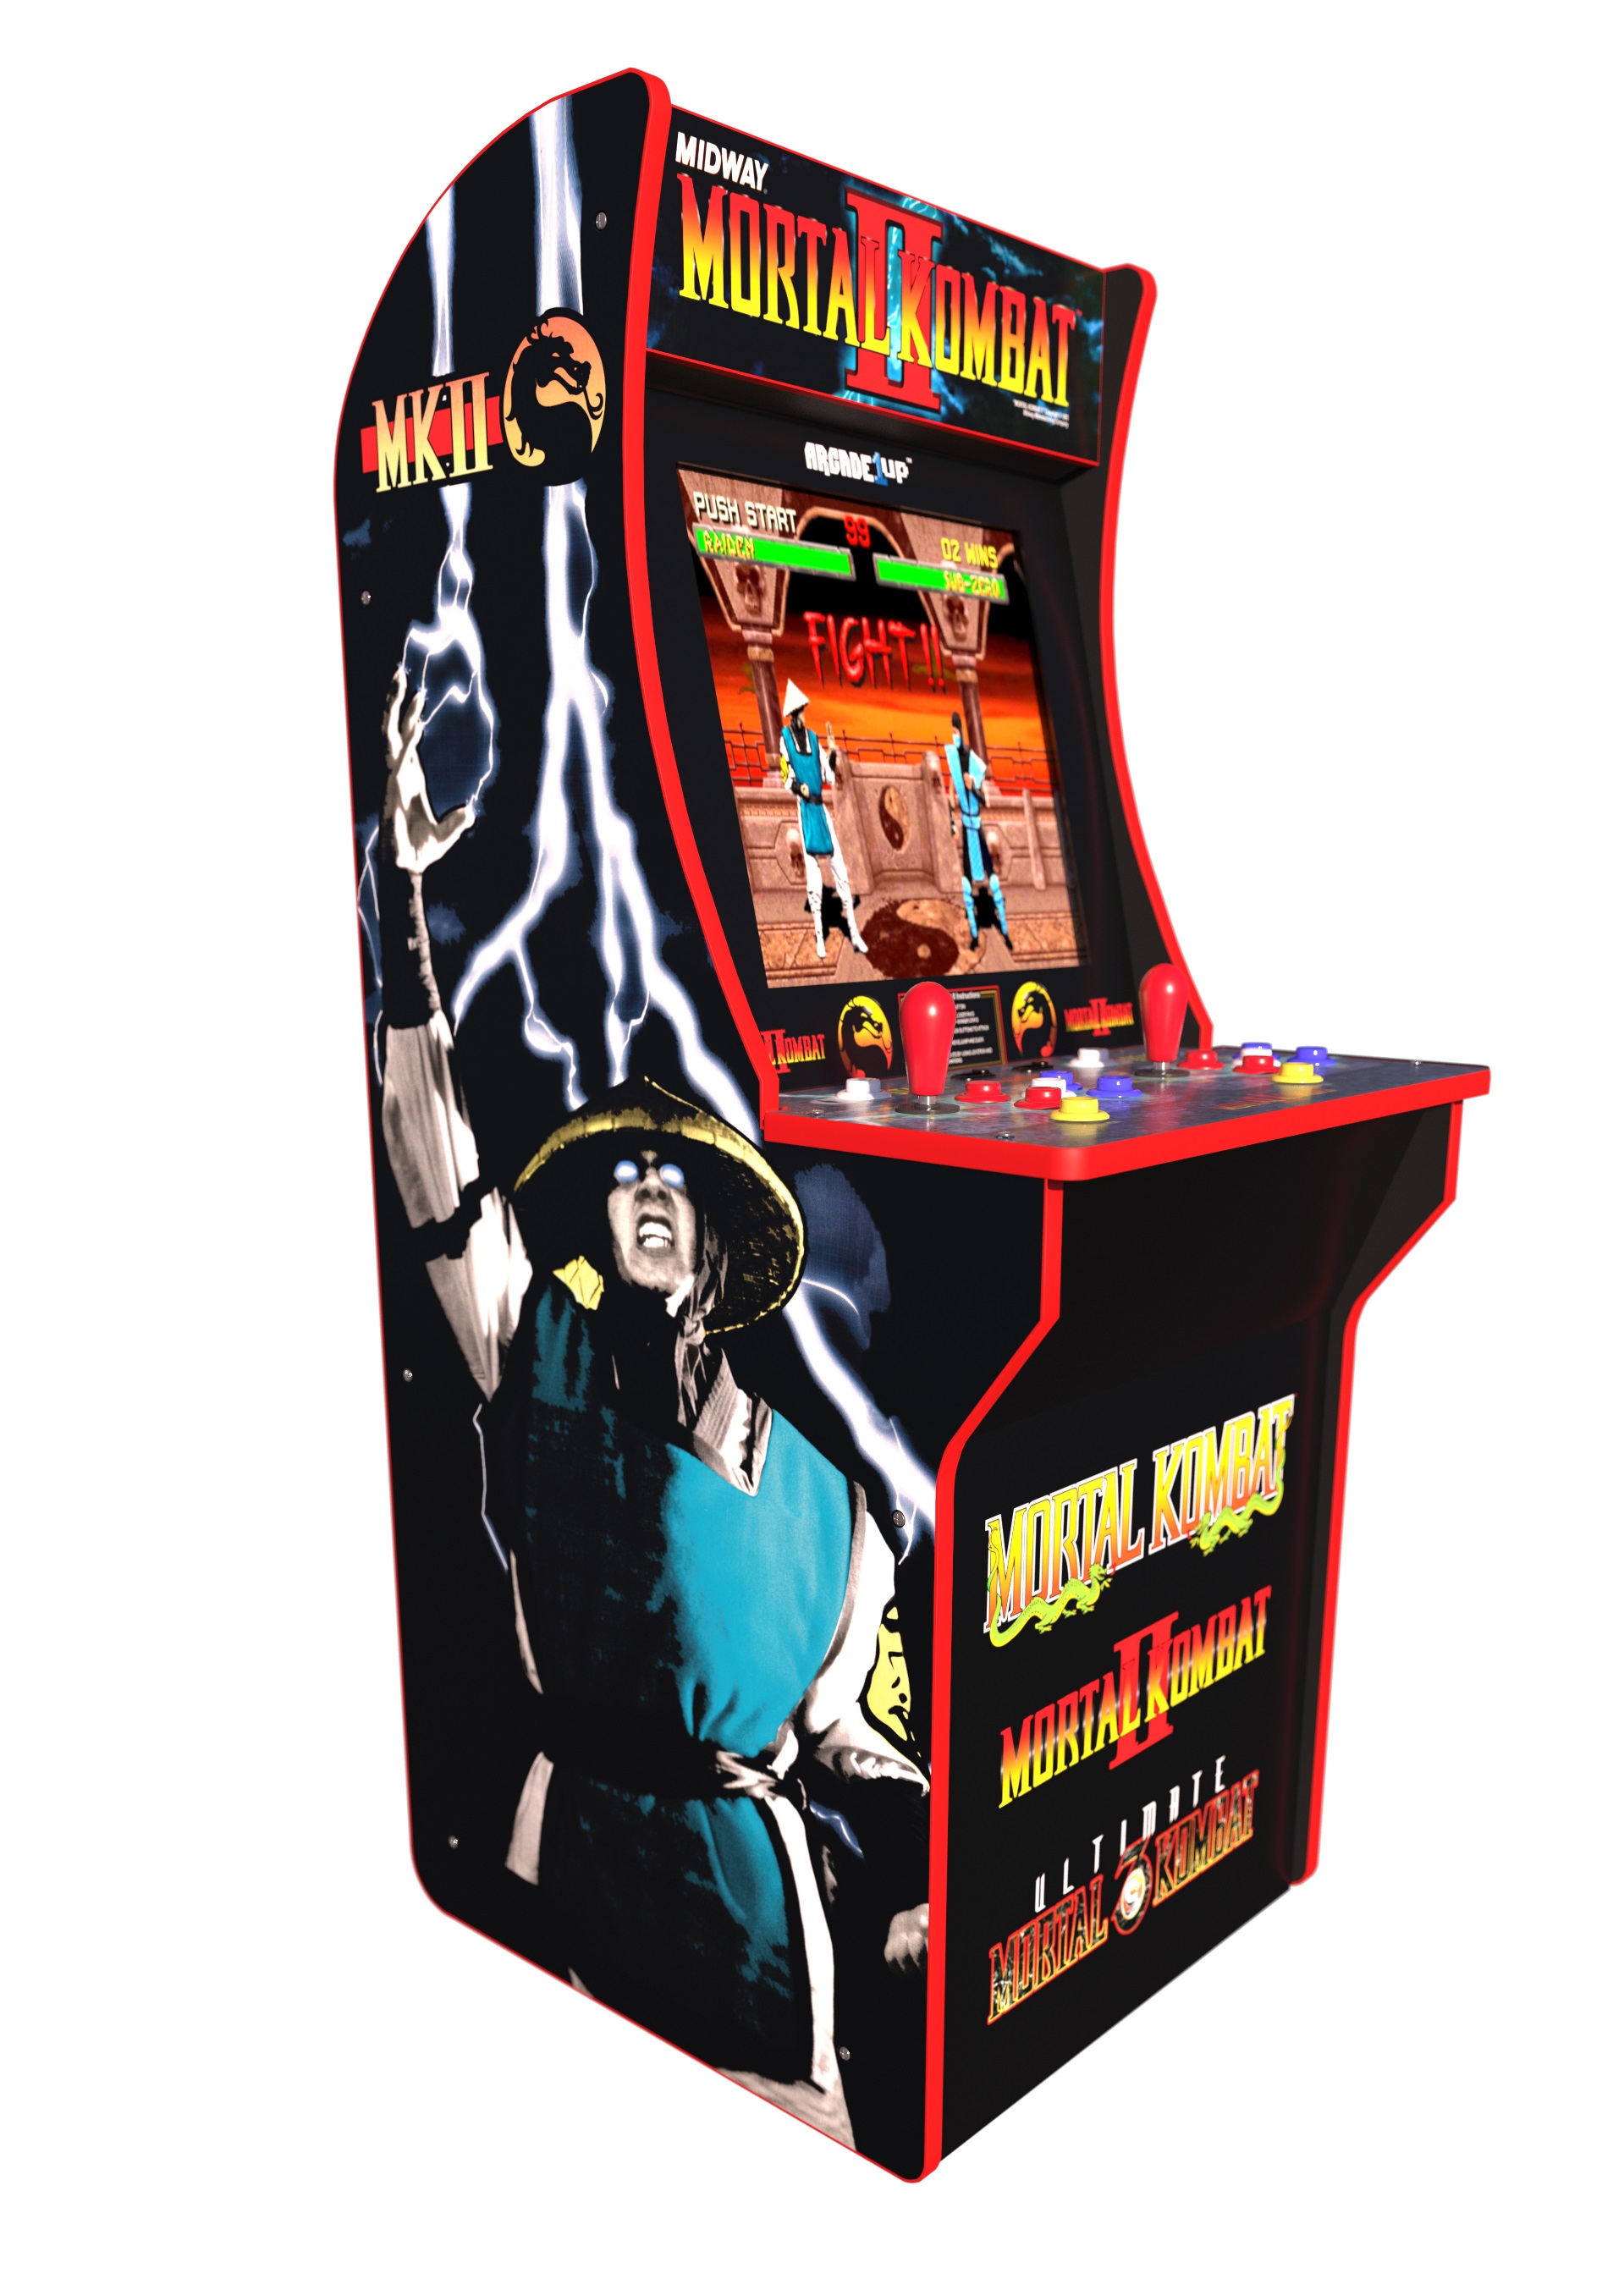 Arcade1Up, Mortal Kombat Arcade Machine without riser, 4ft (Includes Mortal Kombat I,II, III) (Pick Up Today) - image 1 of 5